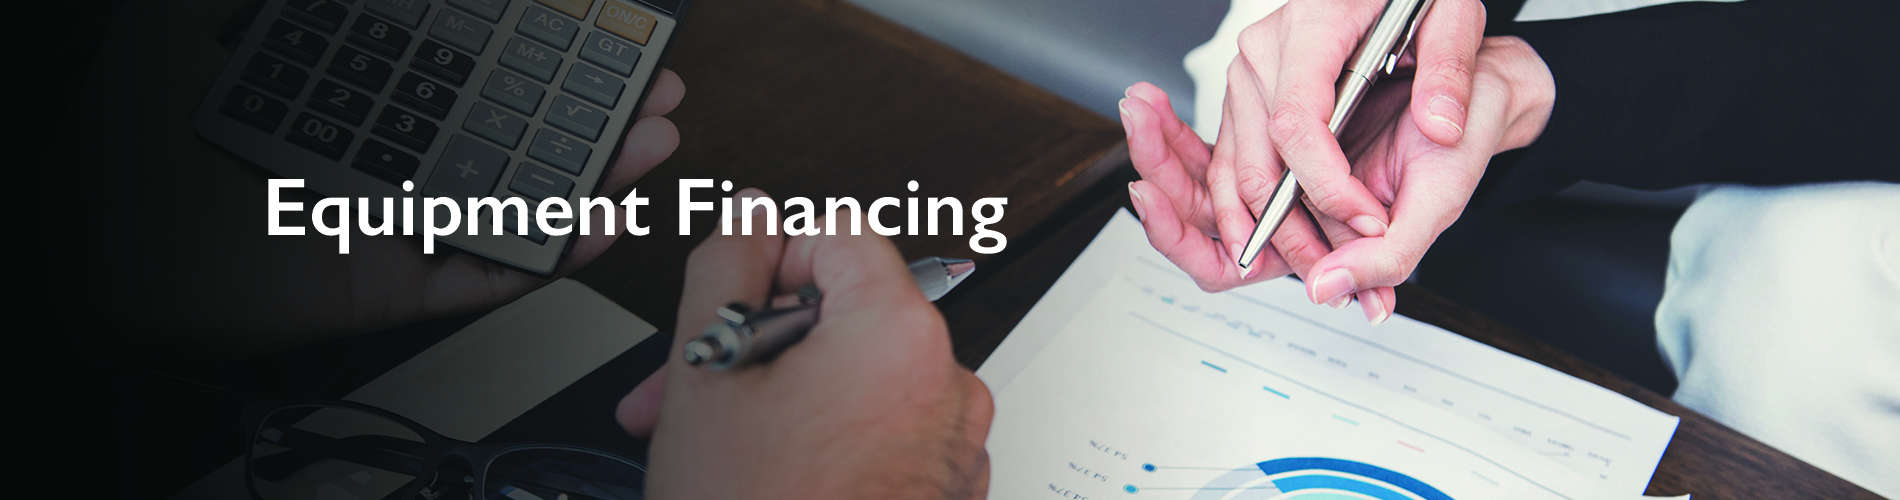 Equipment Financing The Finance Factory